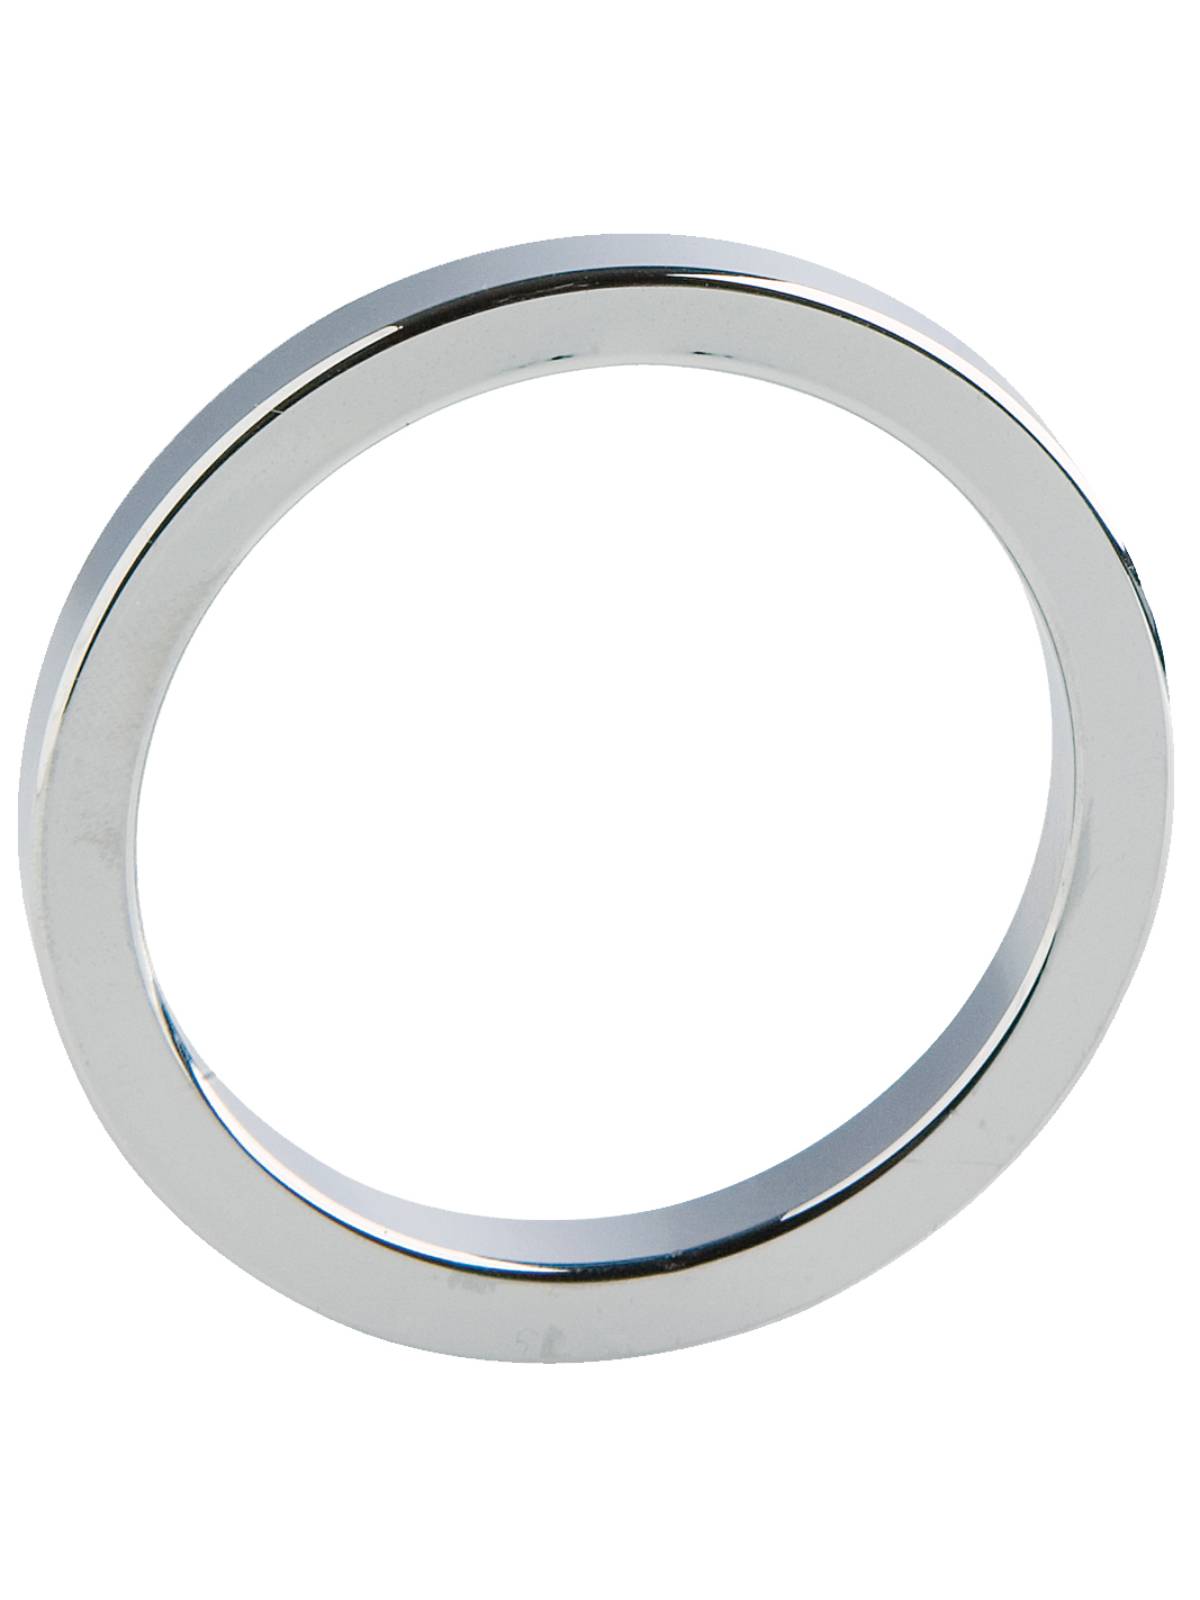 Malesation Metal Ring Starter Steel | Ø 45 mm